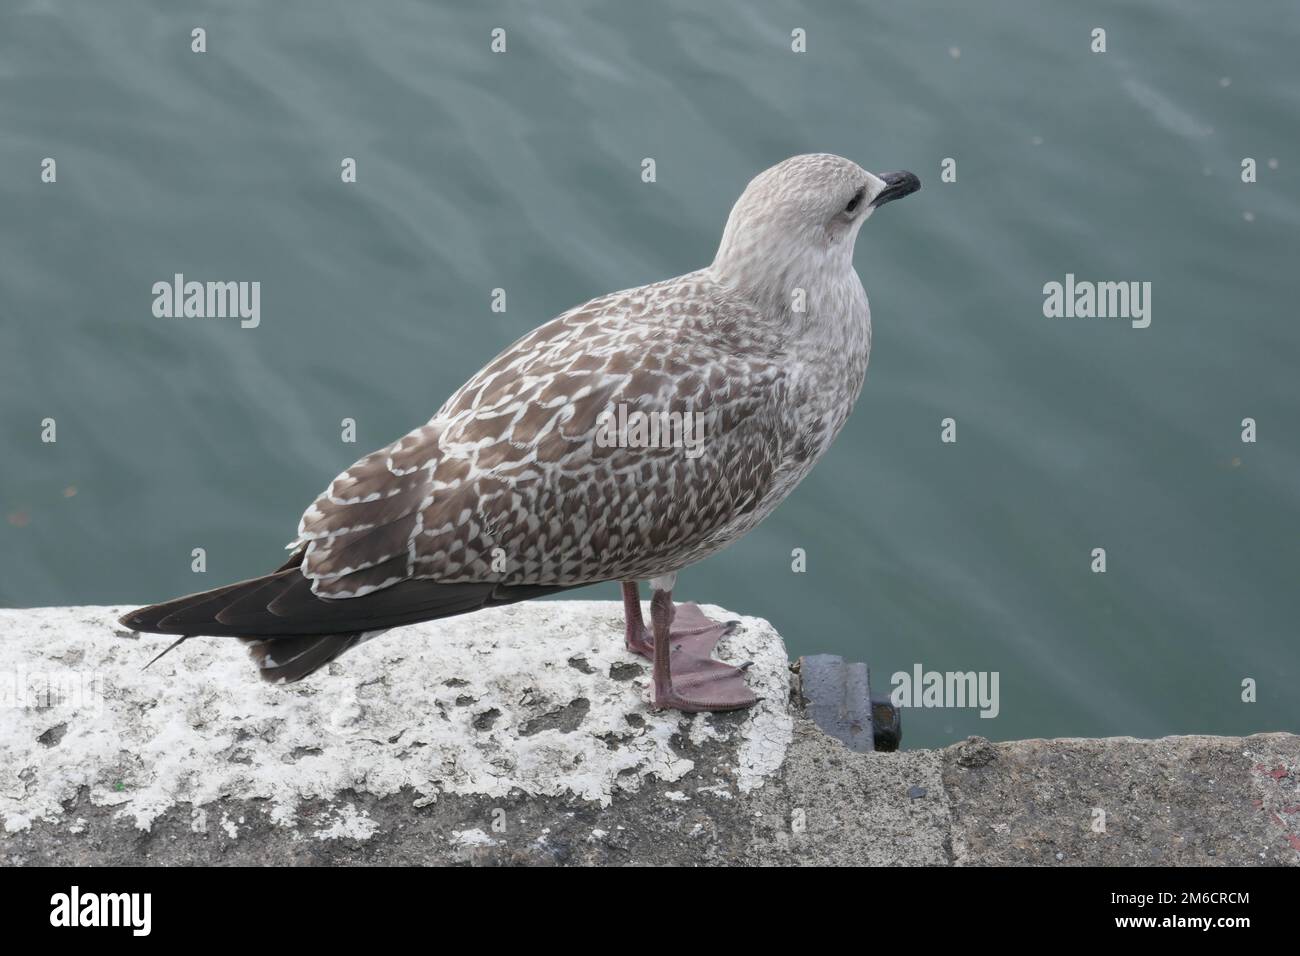 Herring gull bird standing on pier by ocean Stock Photo